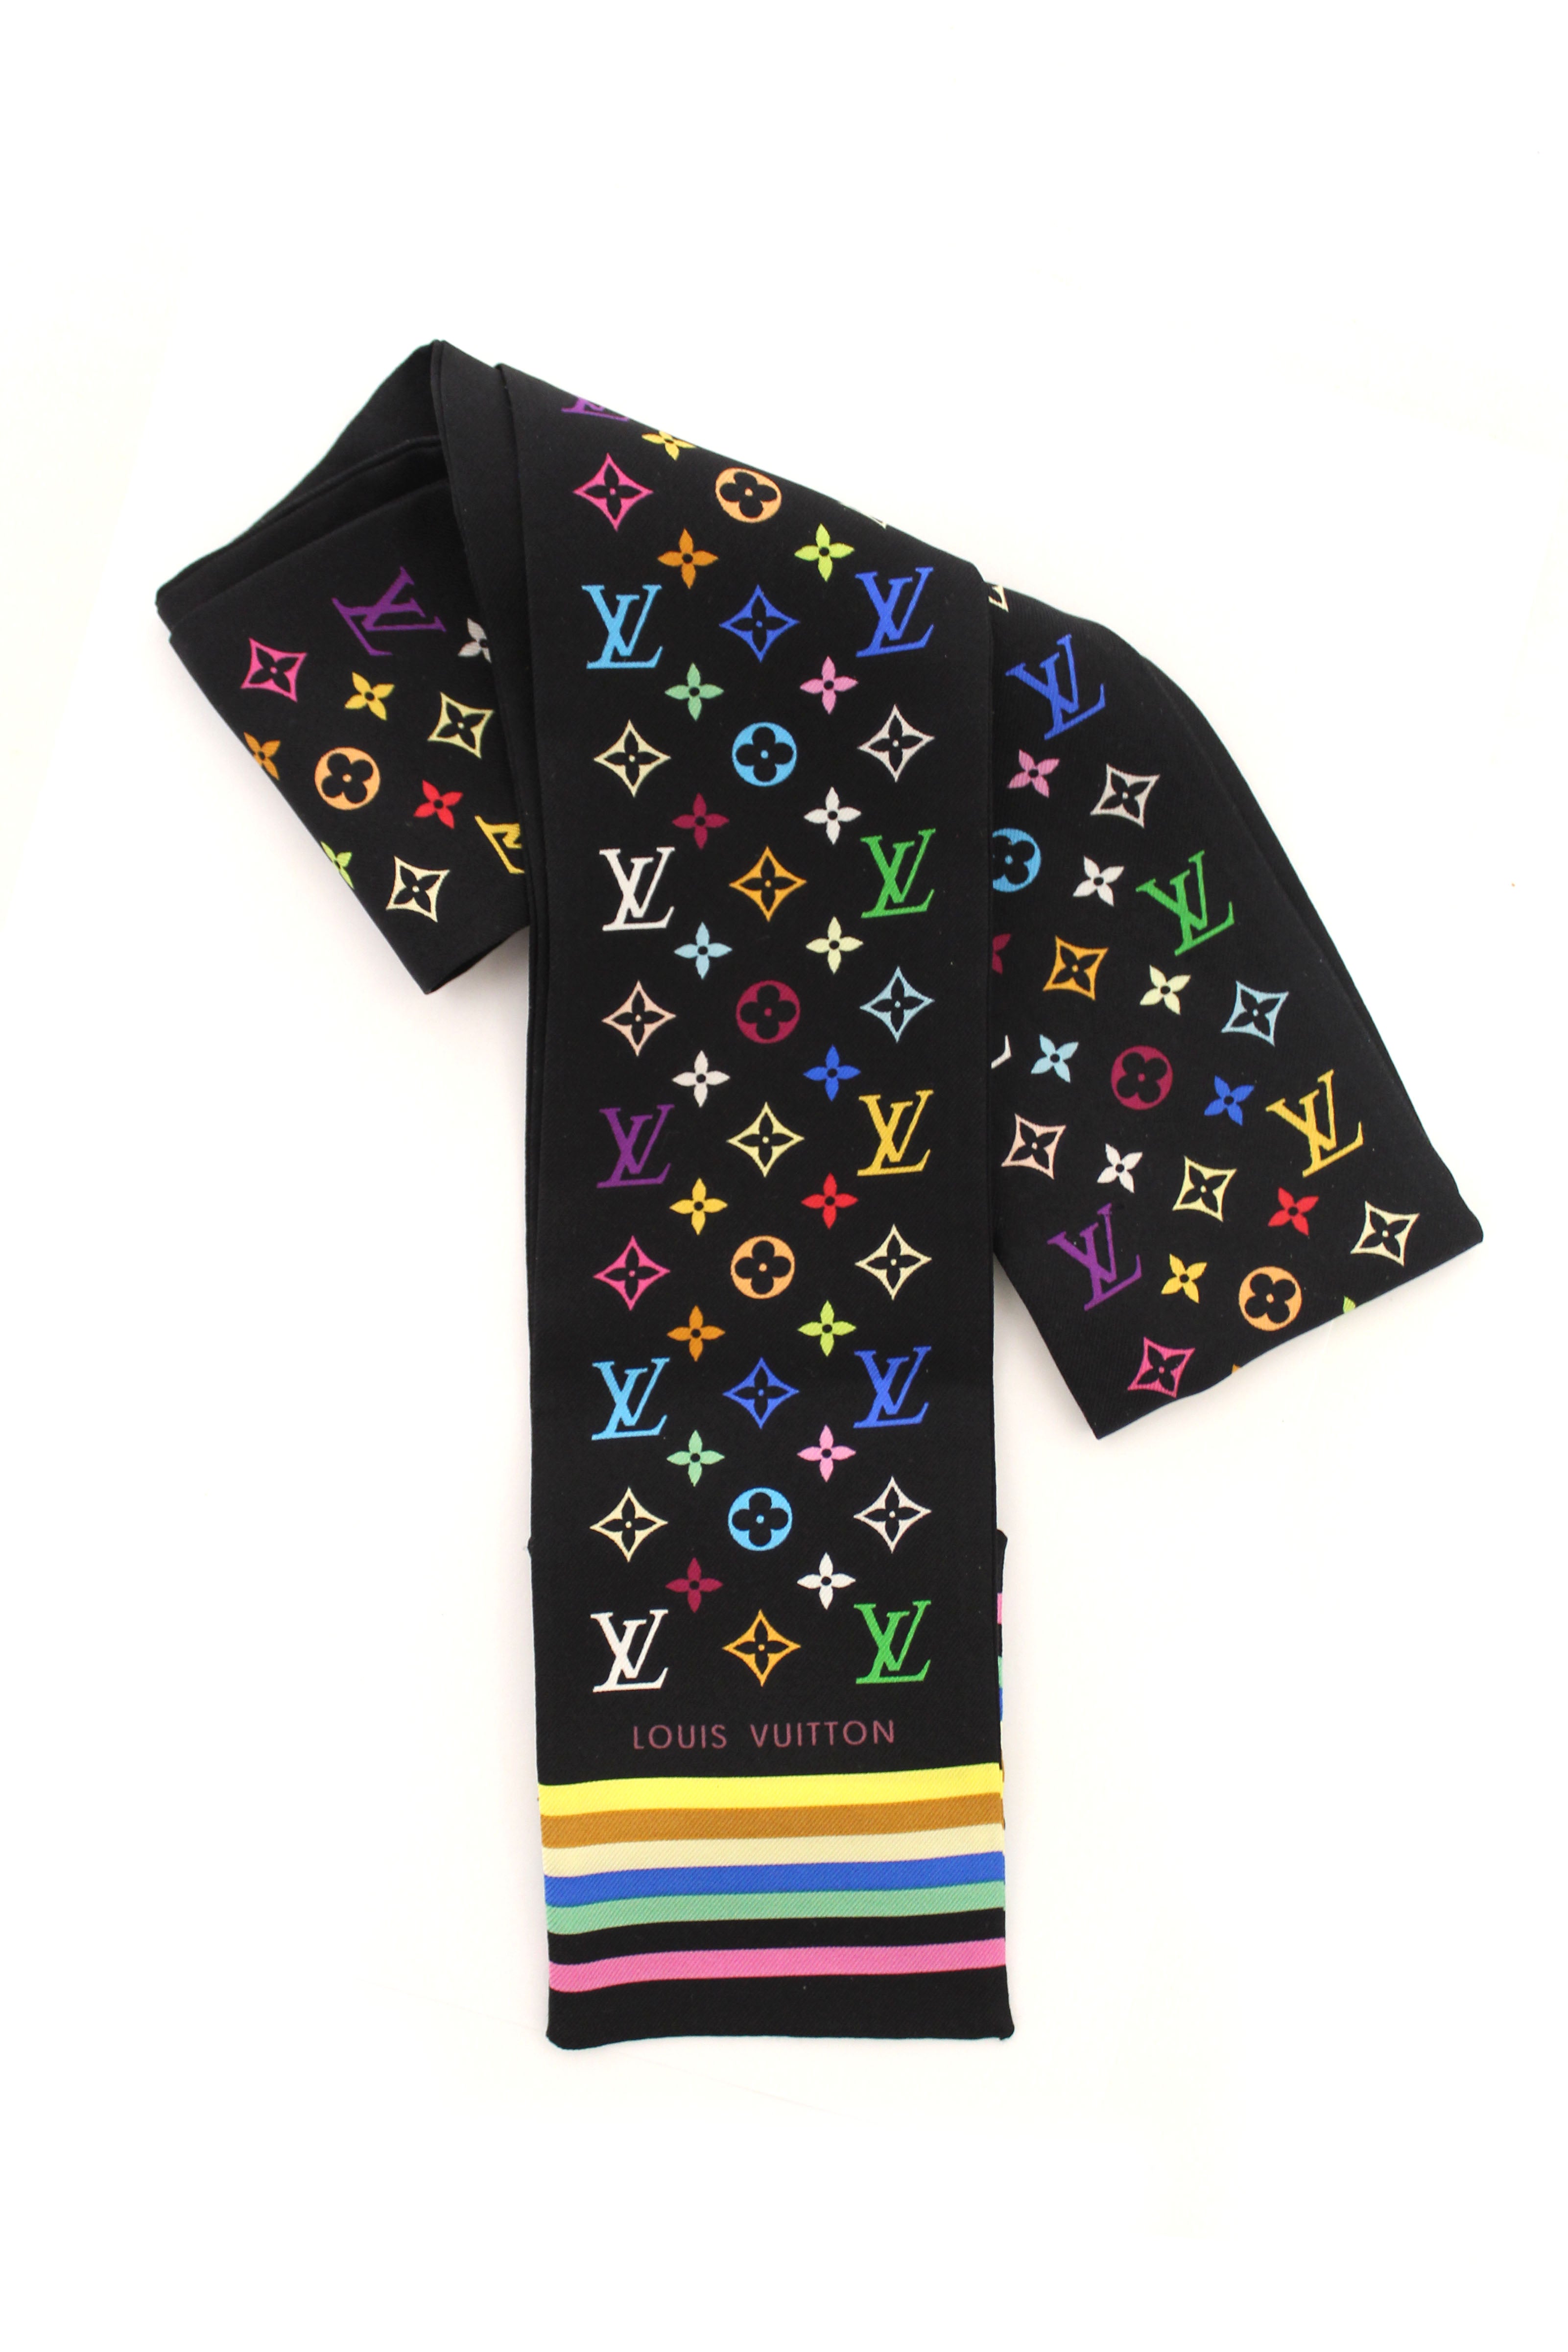 Authentic Louis Vuitton Monogram Multicolor Black Twilly Bandeau Scarf